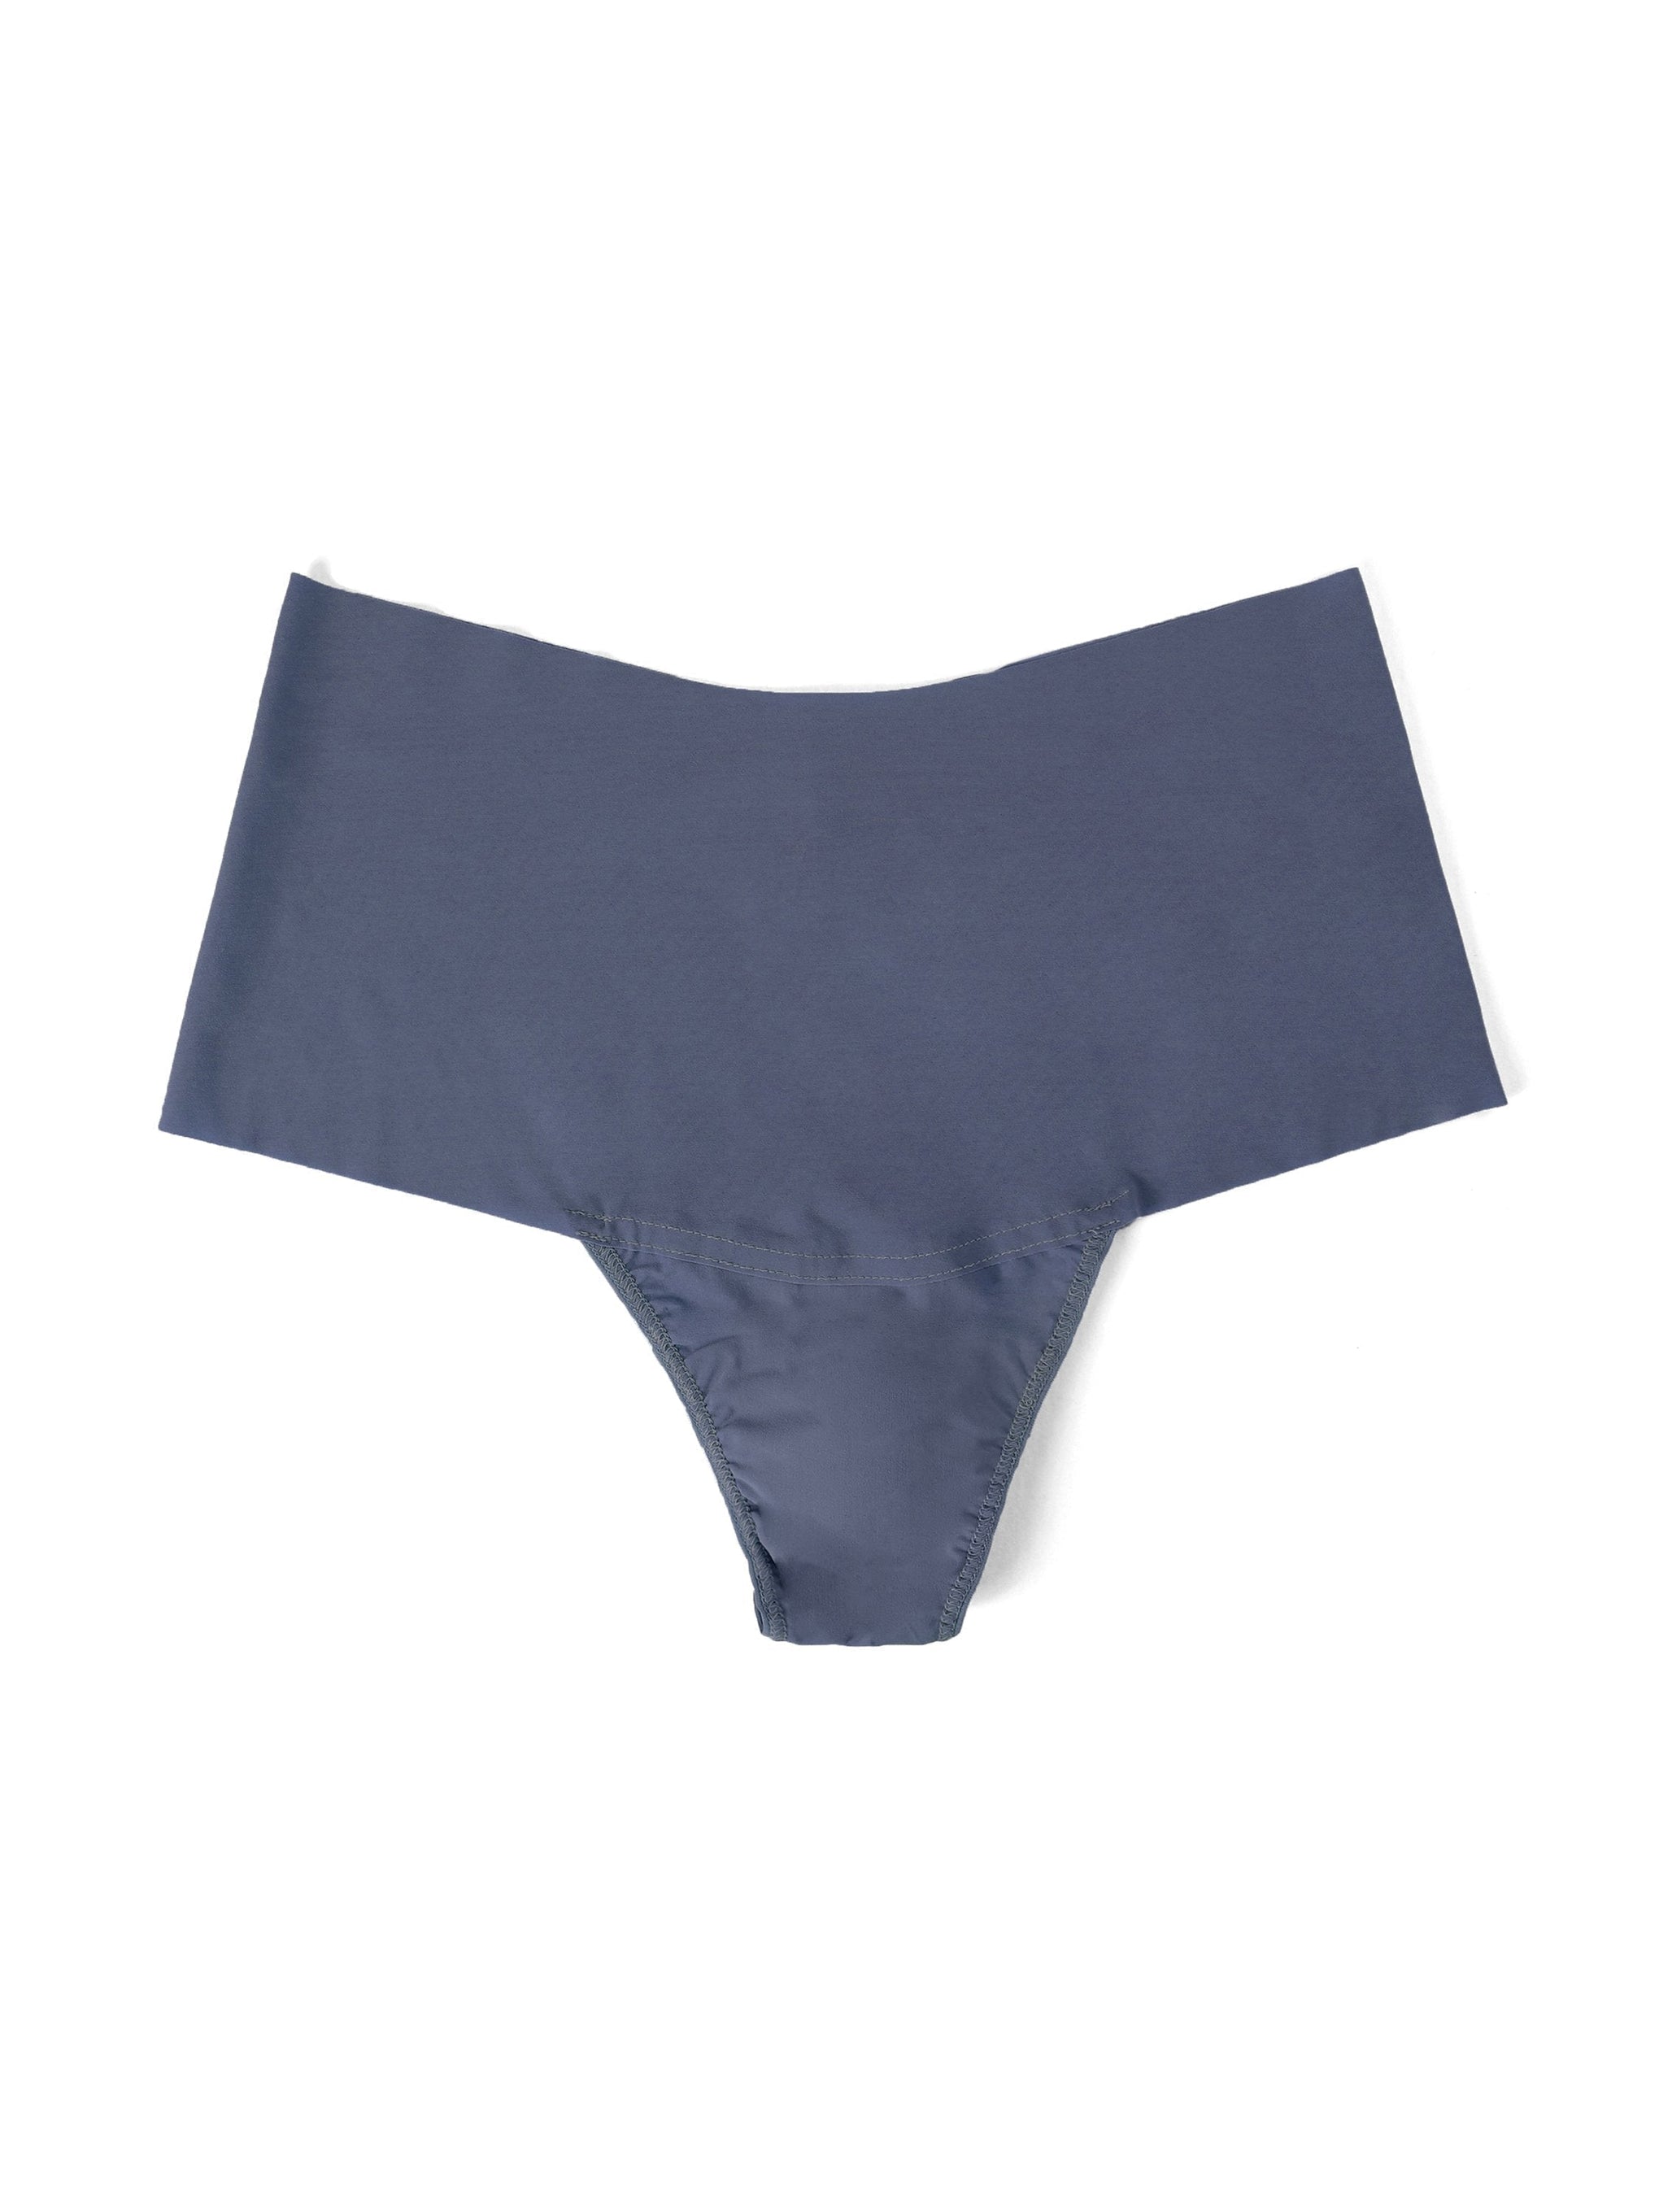 New GAP BODY Size XL Blue Ultra Low Rise Thong Panty